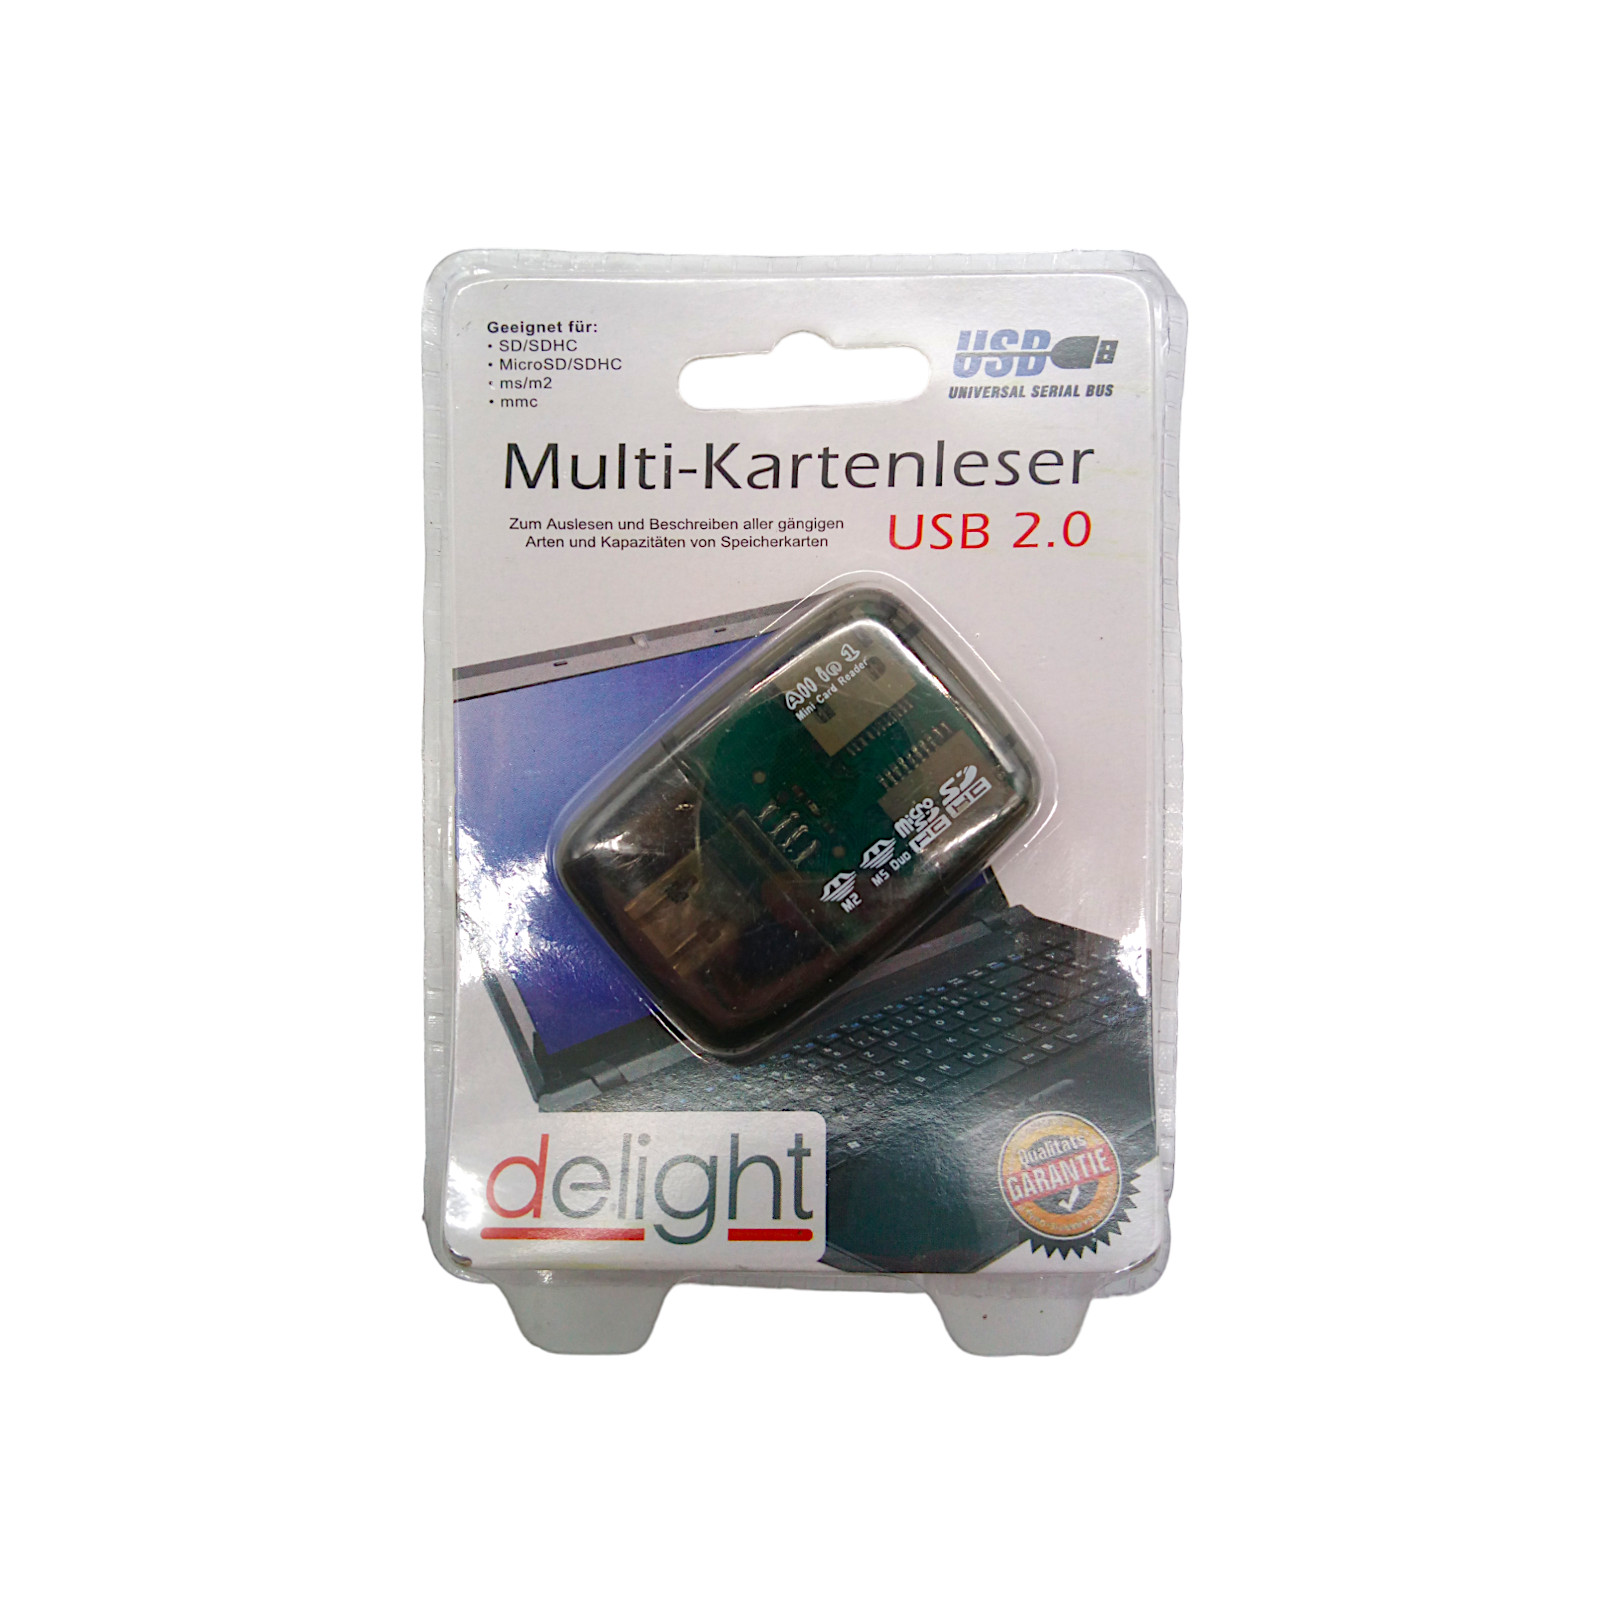 USB 2.0-Multi-Kartenlesegerät